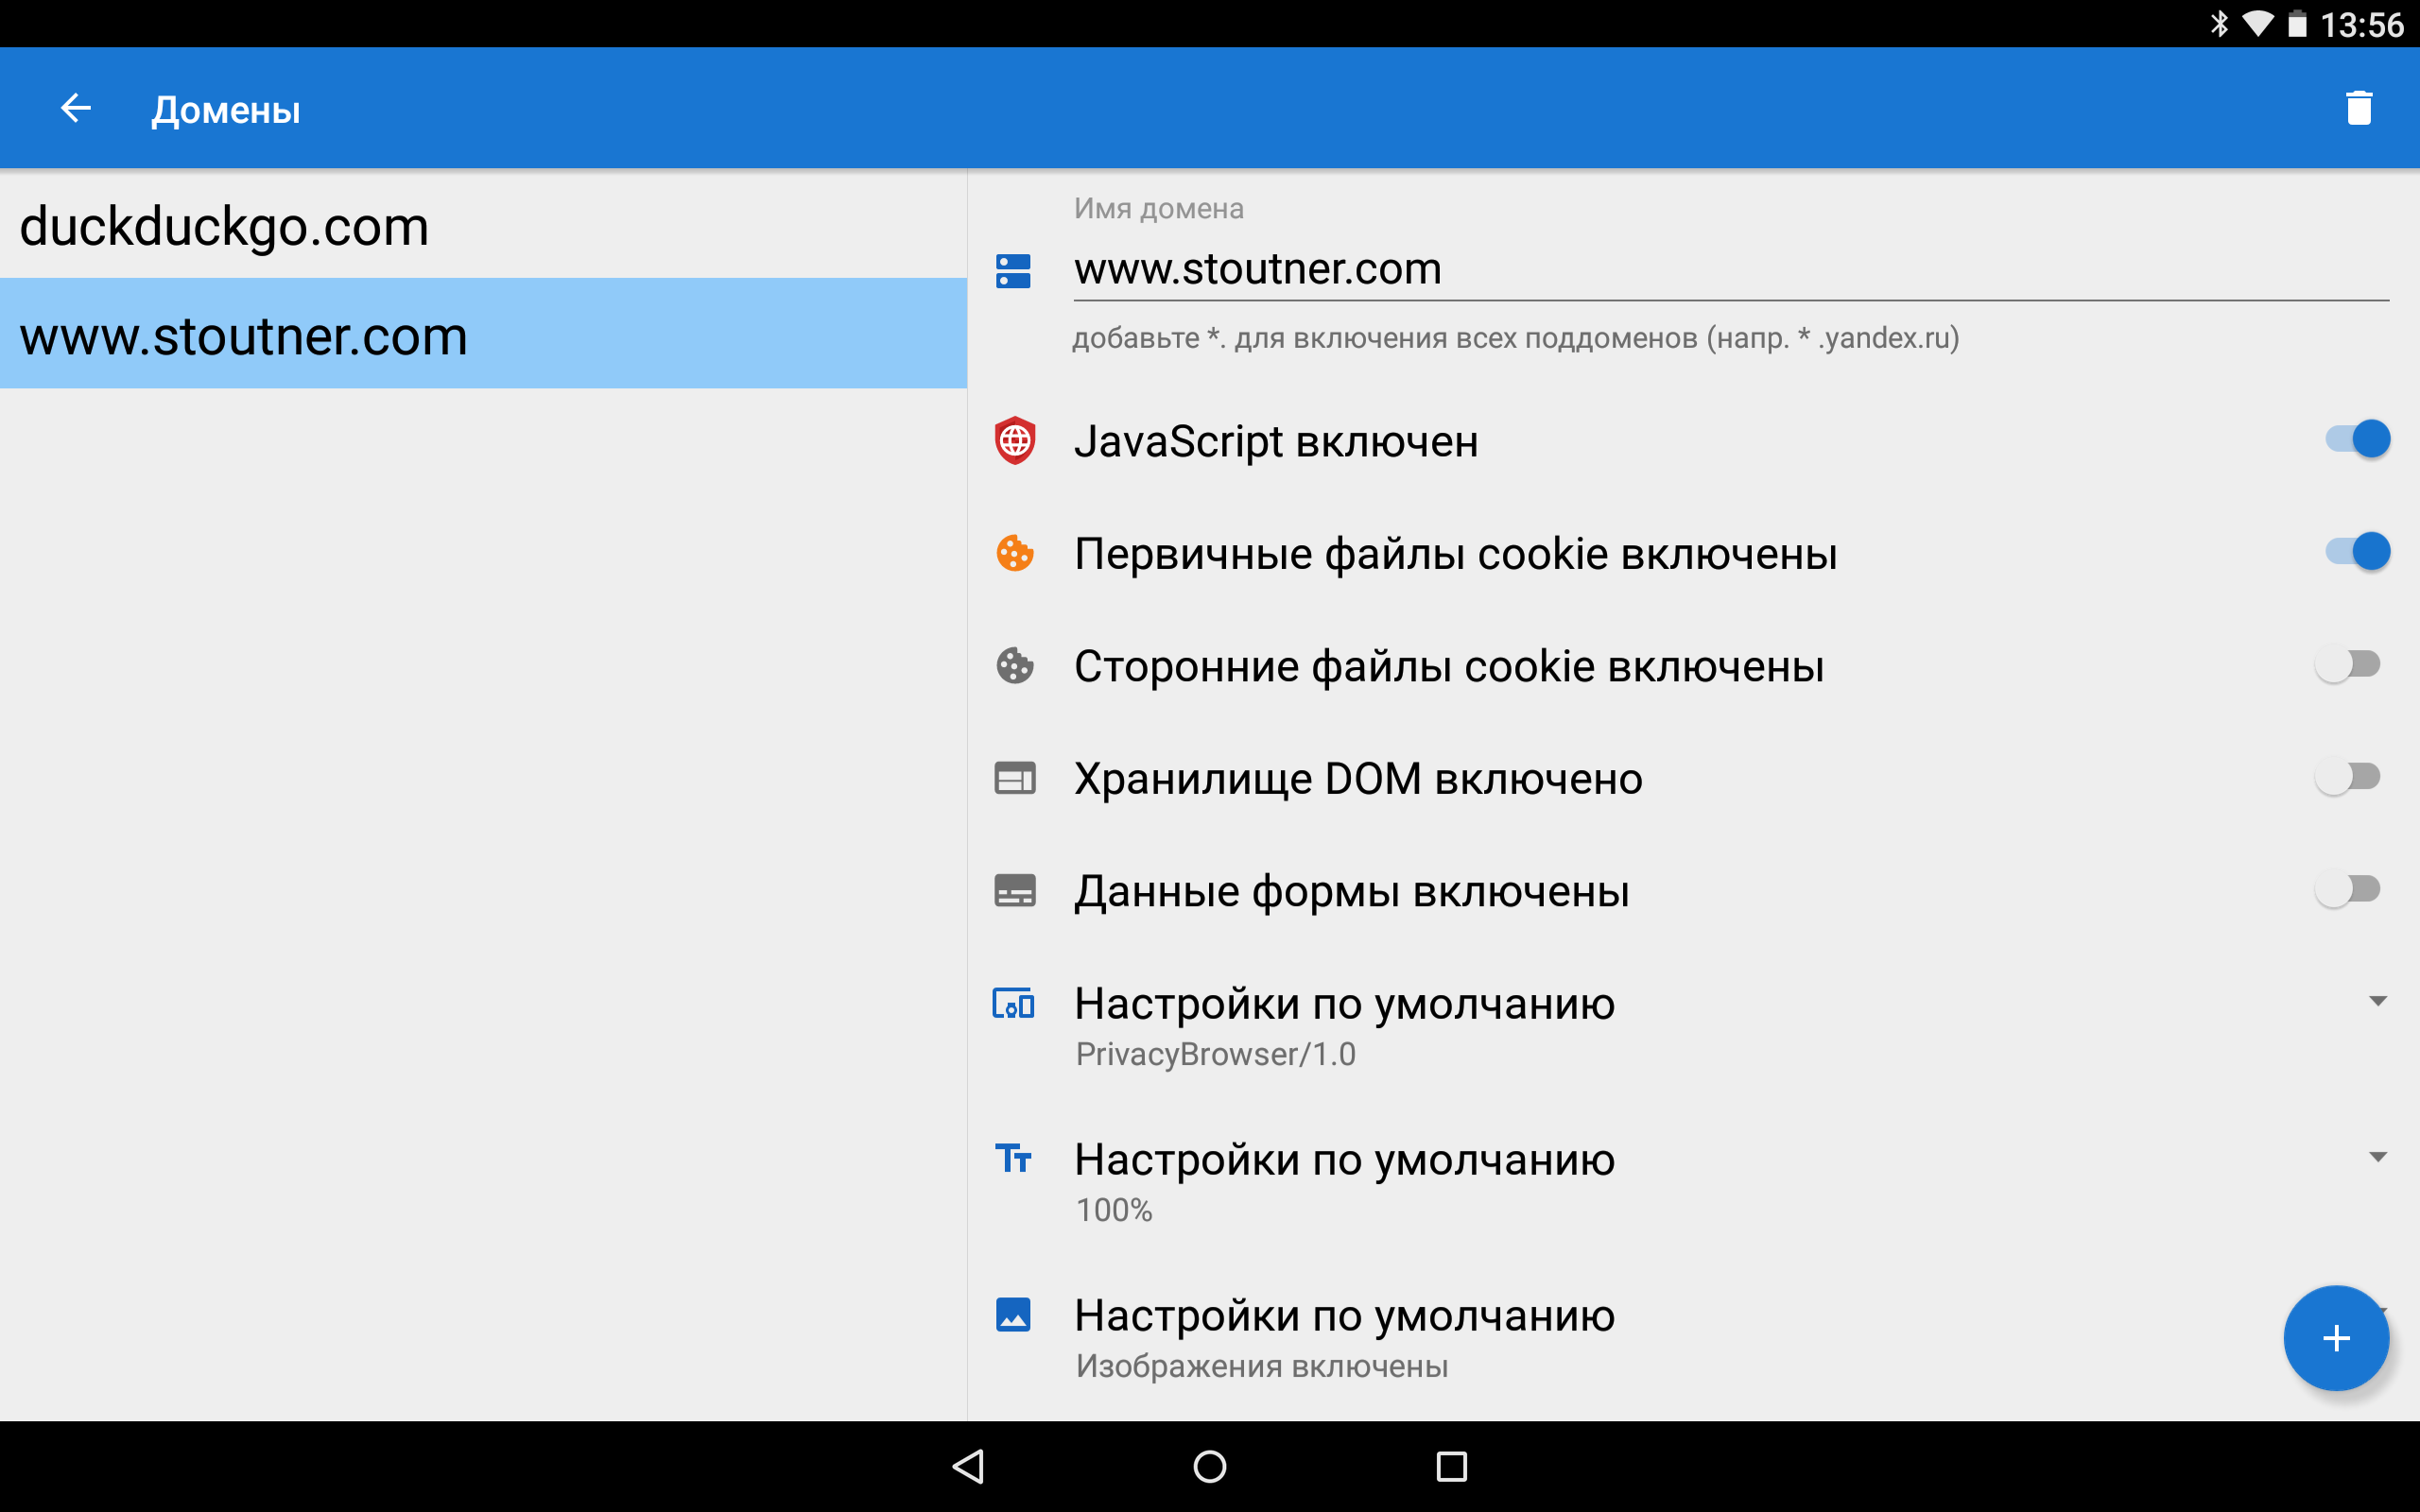 fastlane/metadata/android/ru/images/tenInchScreenshots/01-Domains.png